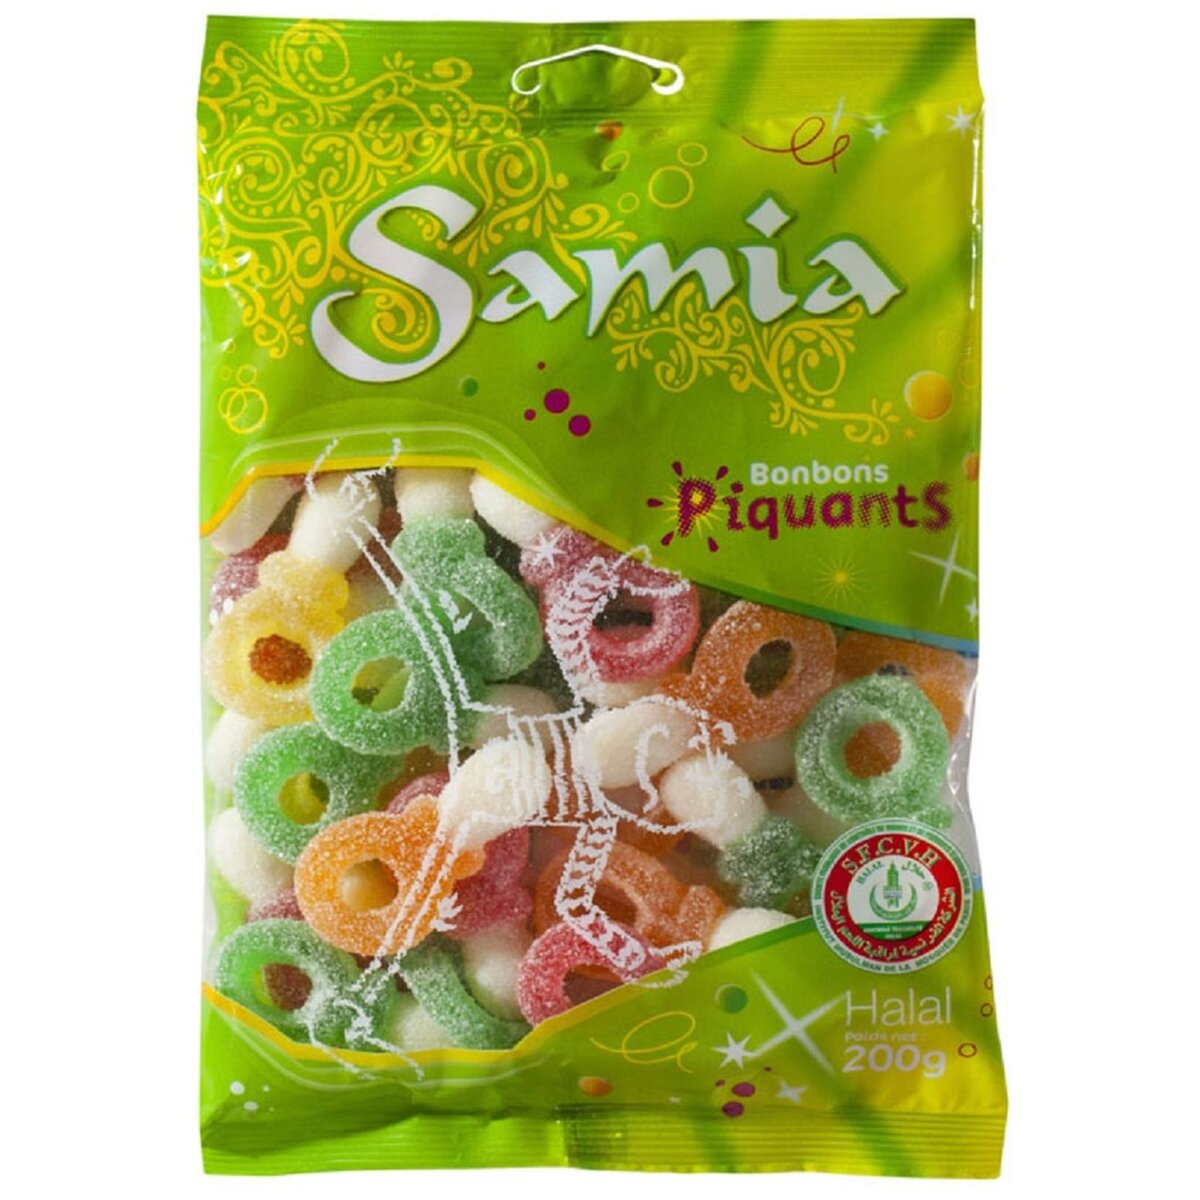 SAMIA Samia bonbon halal tétines piquantes sachet 200g